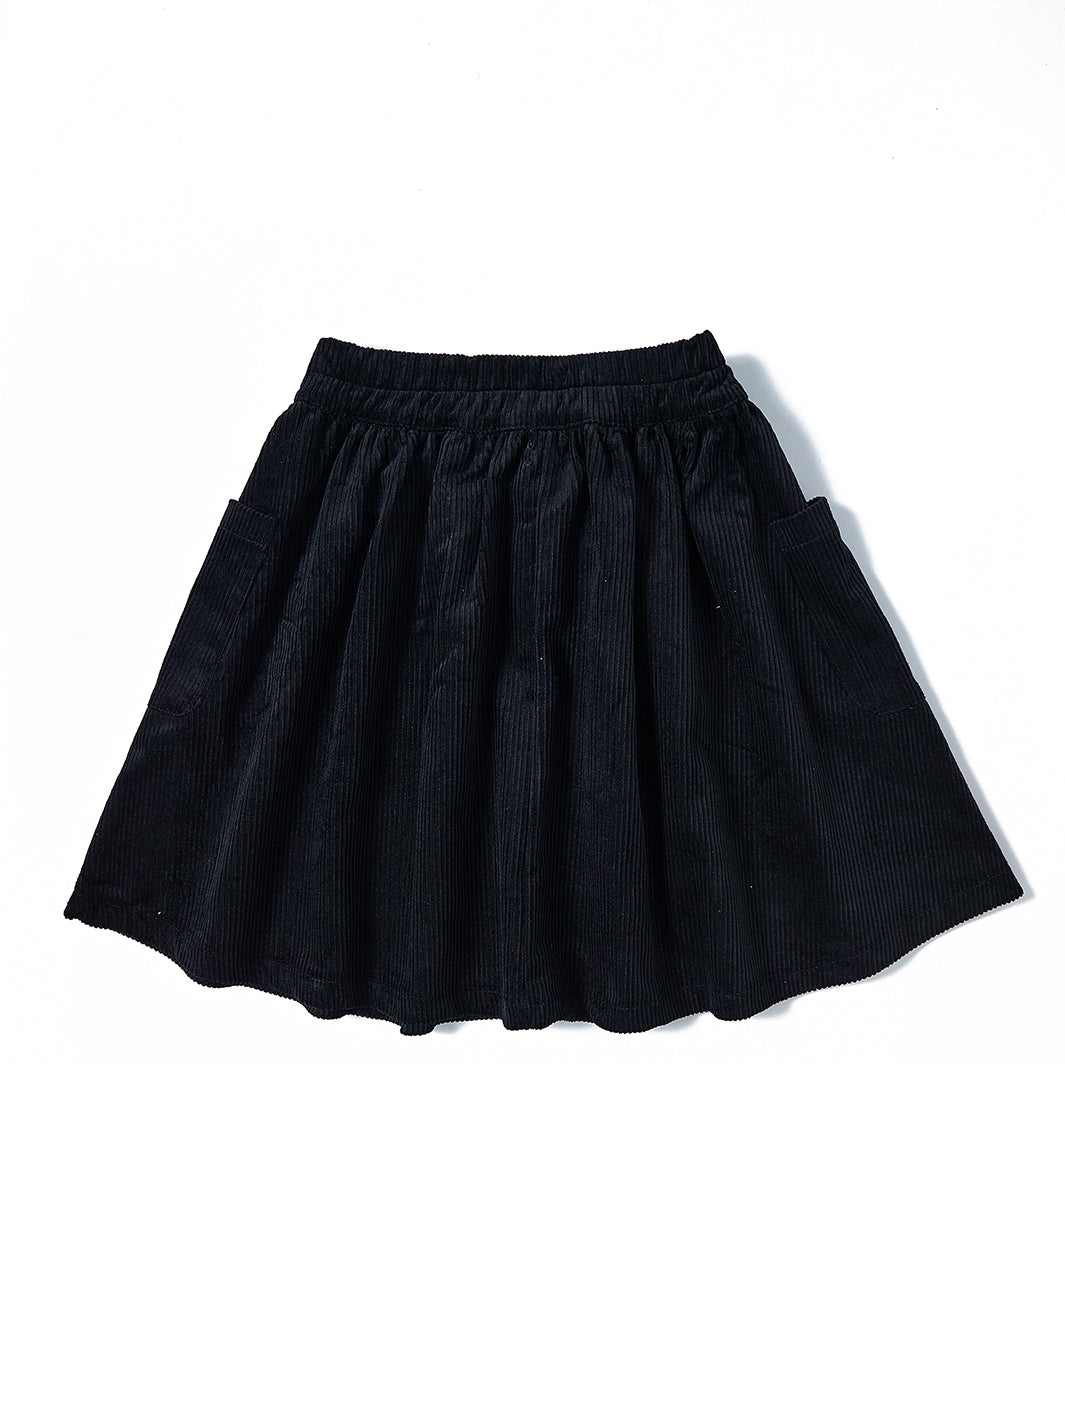 Corduroy Skirt - Black